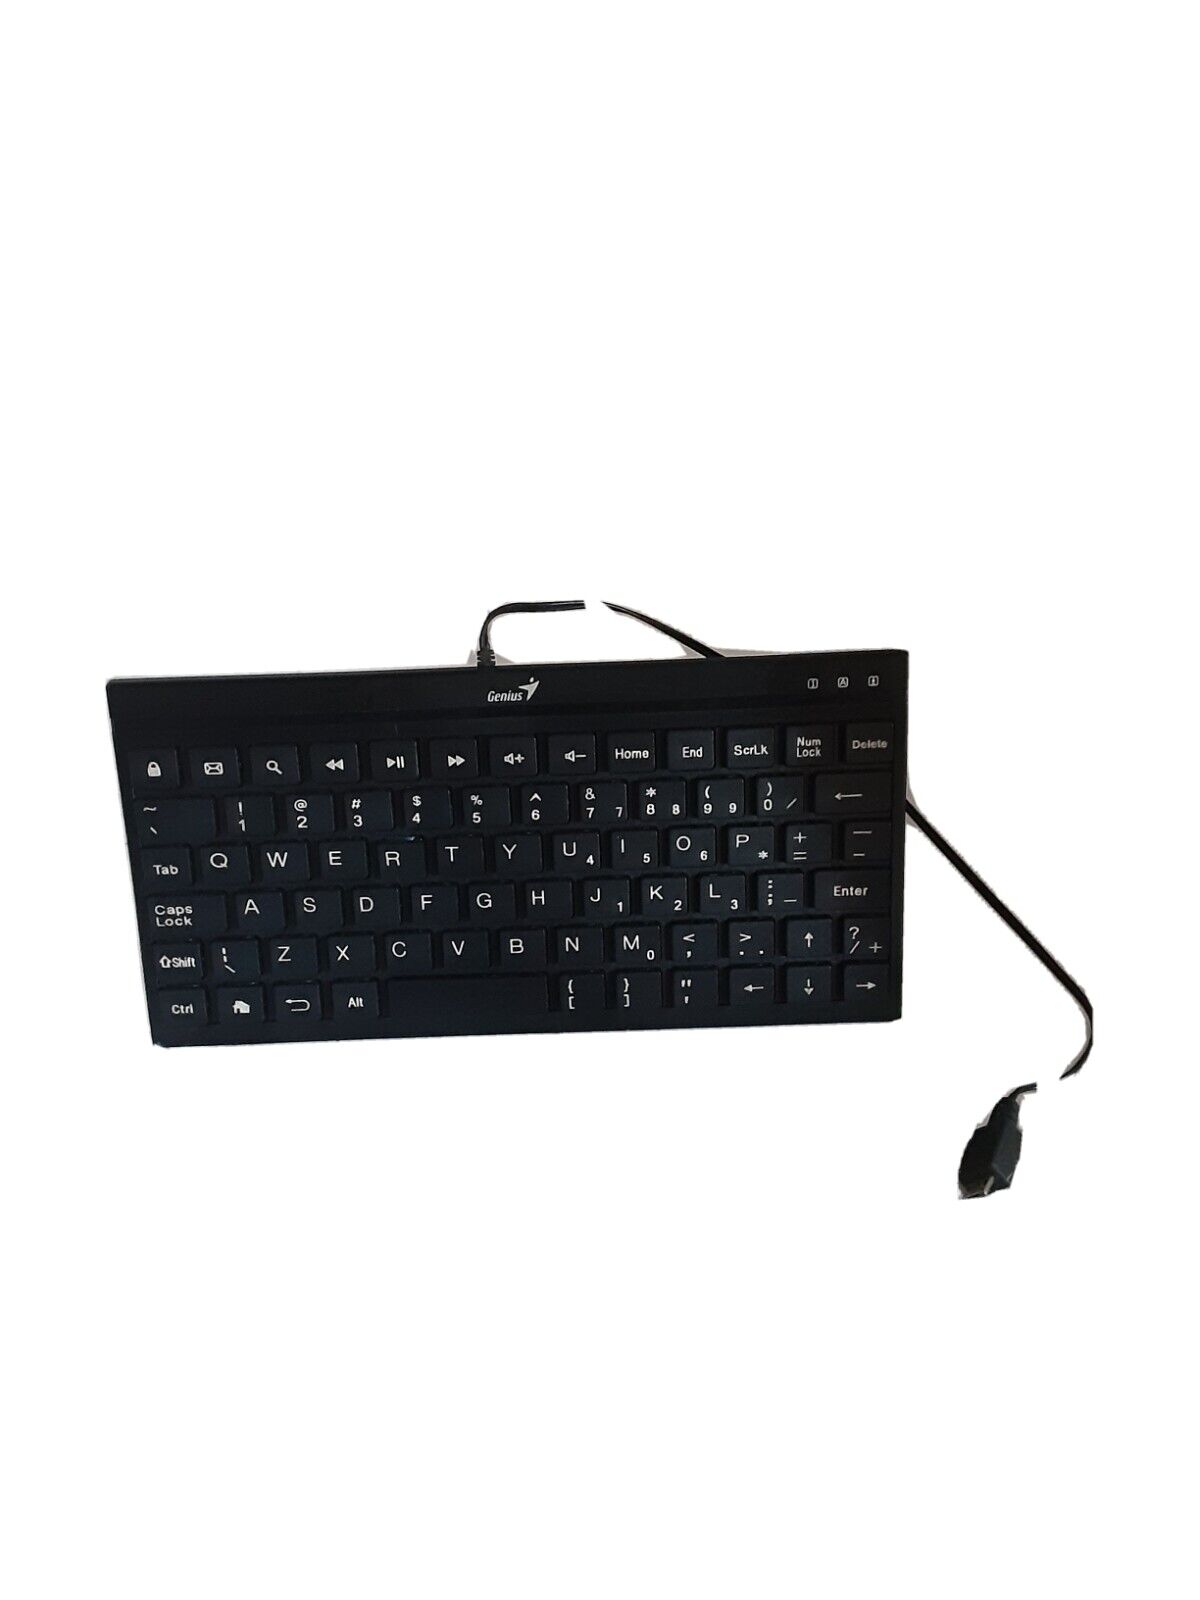 Genius Keyboard luxepad a110